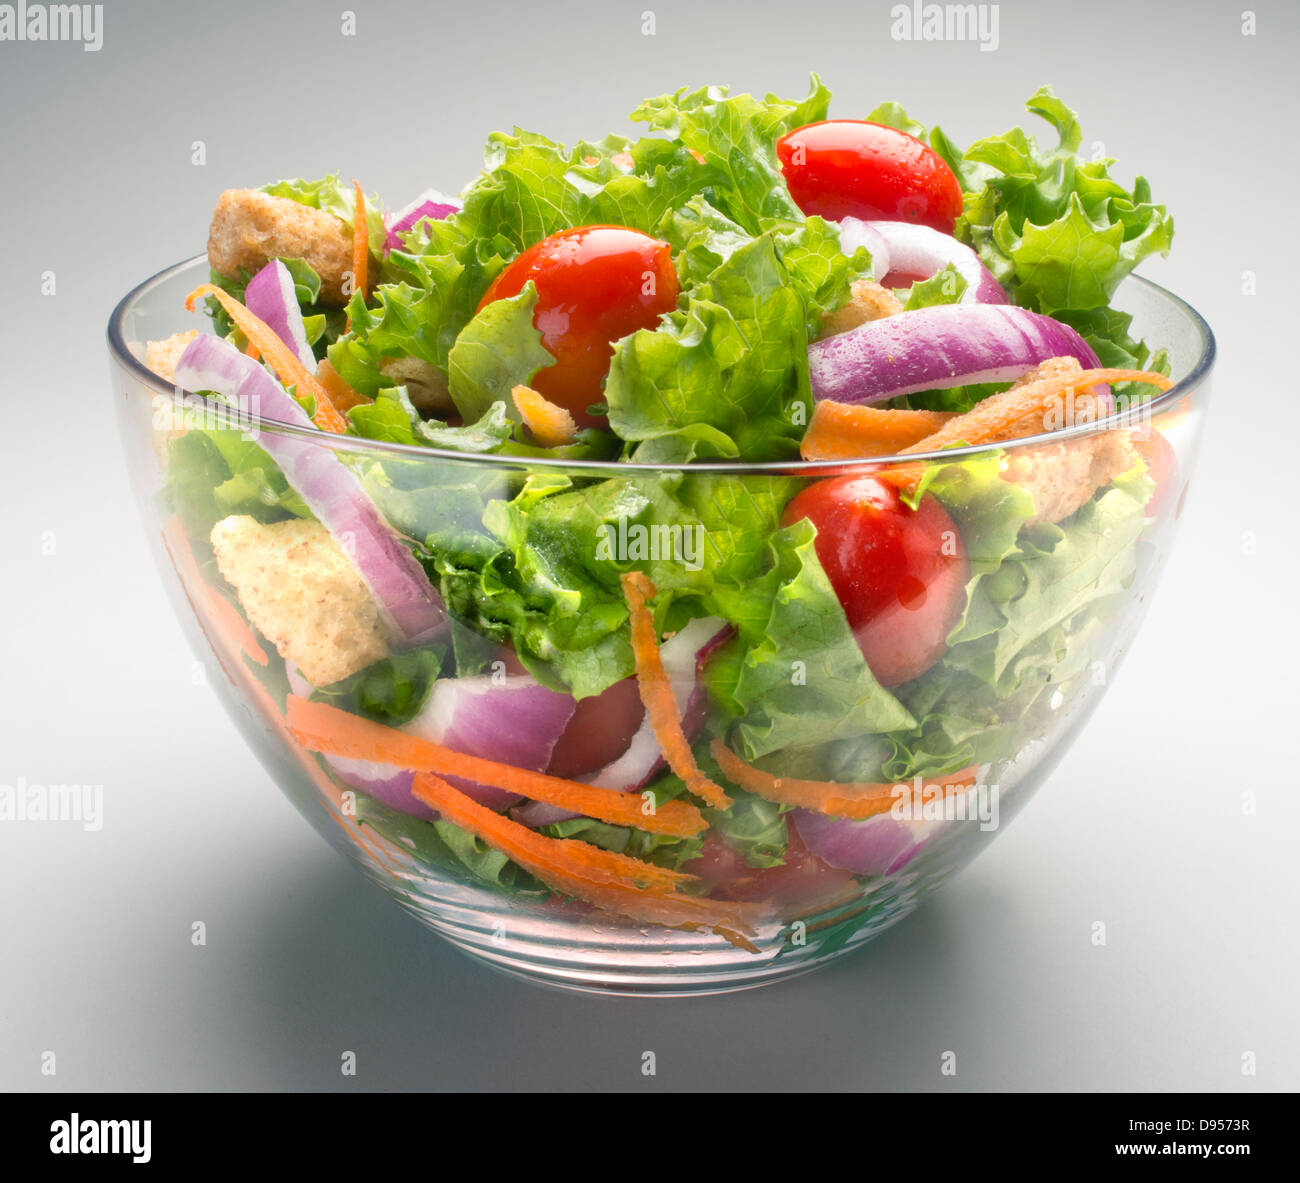 salad, bowl, serving vegetables Stock Photo